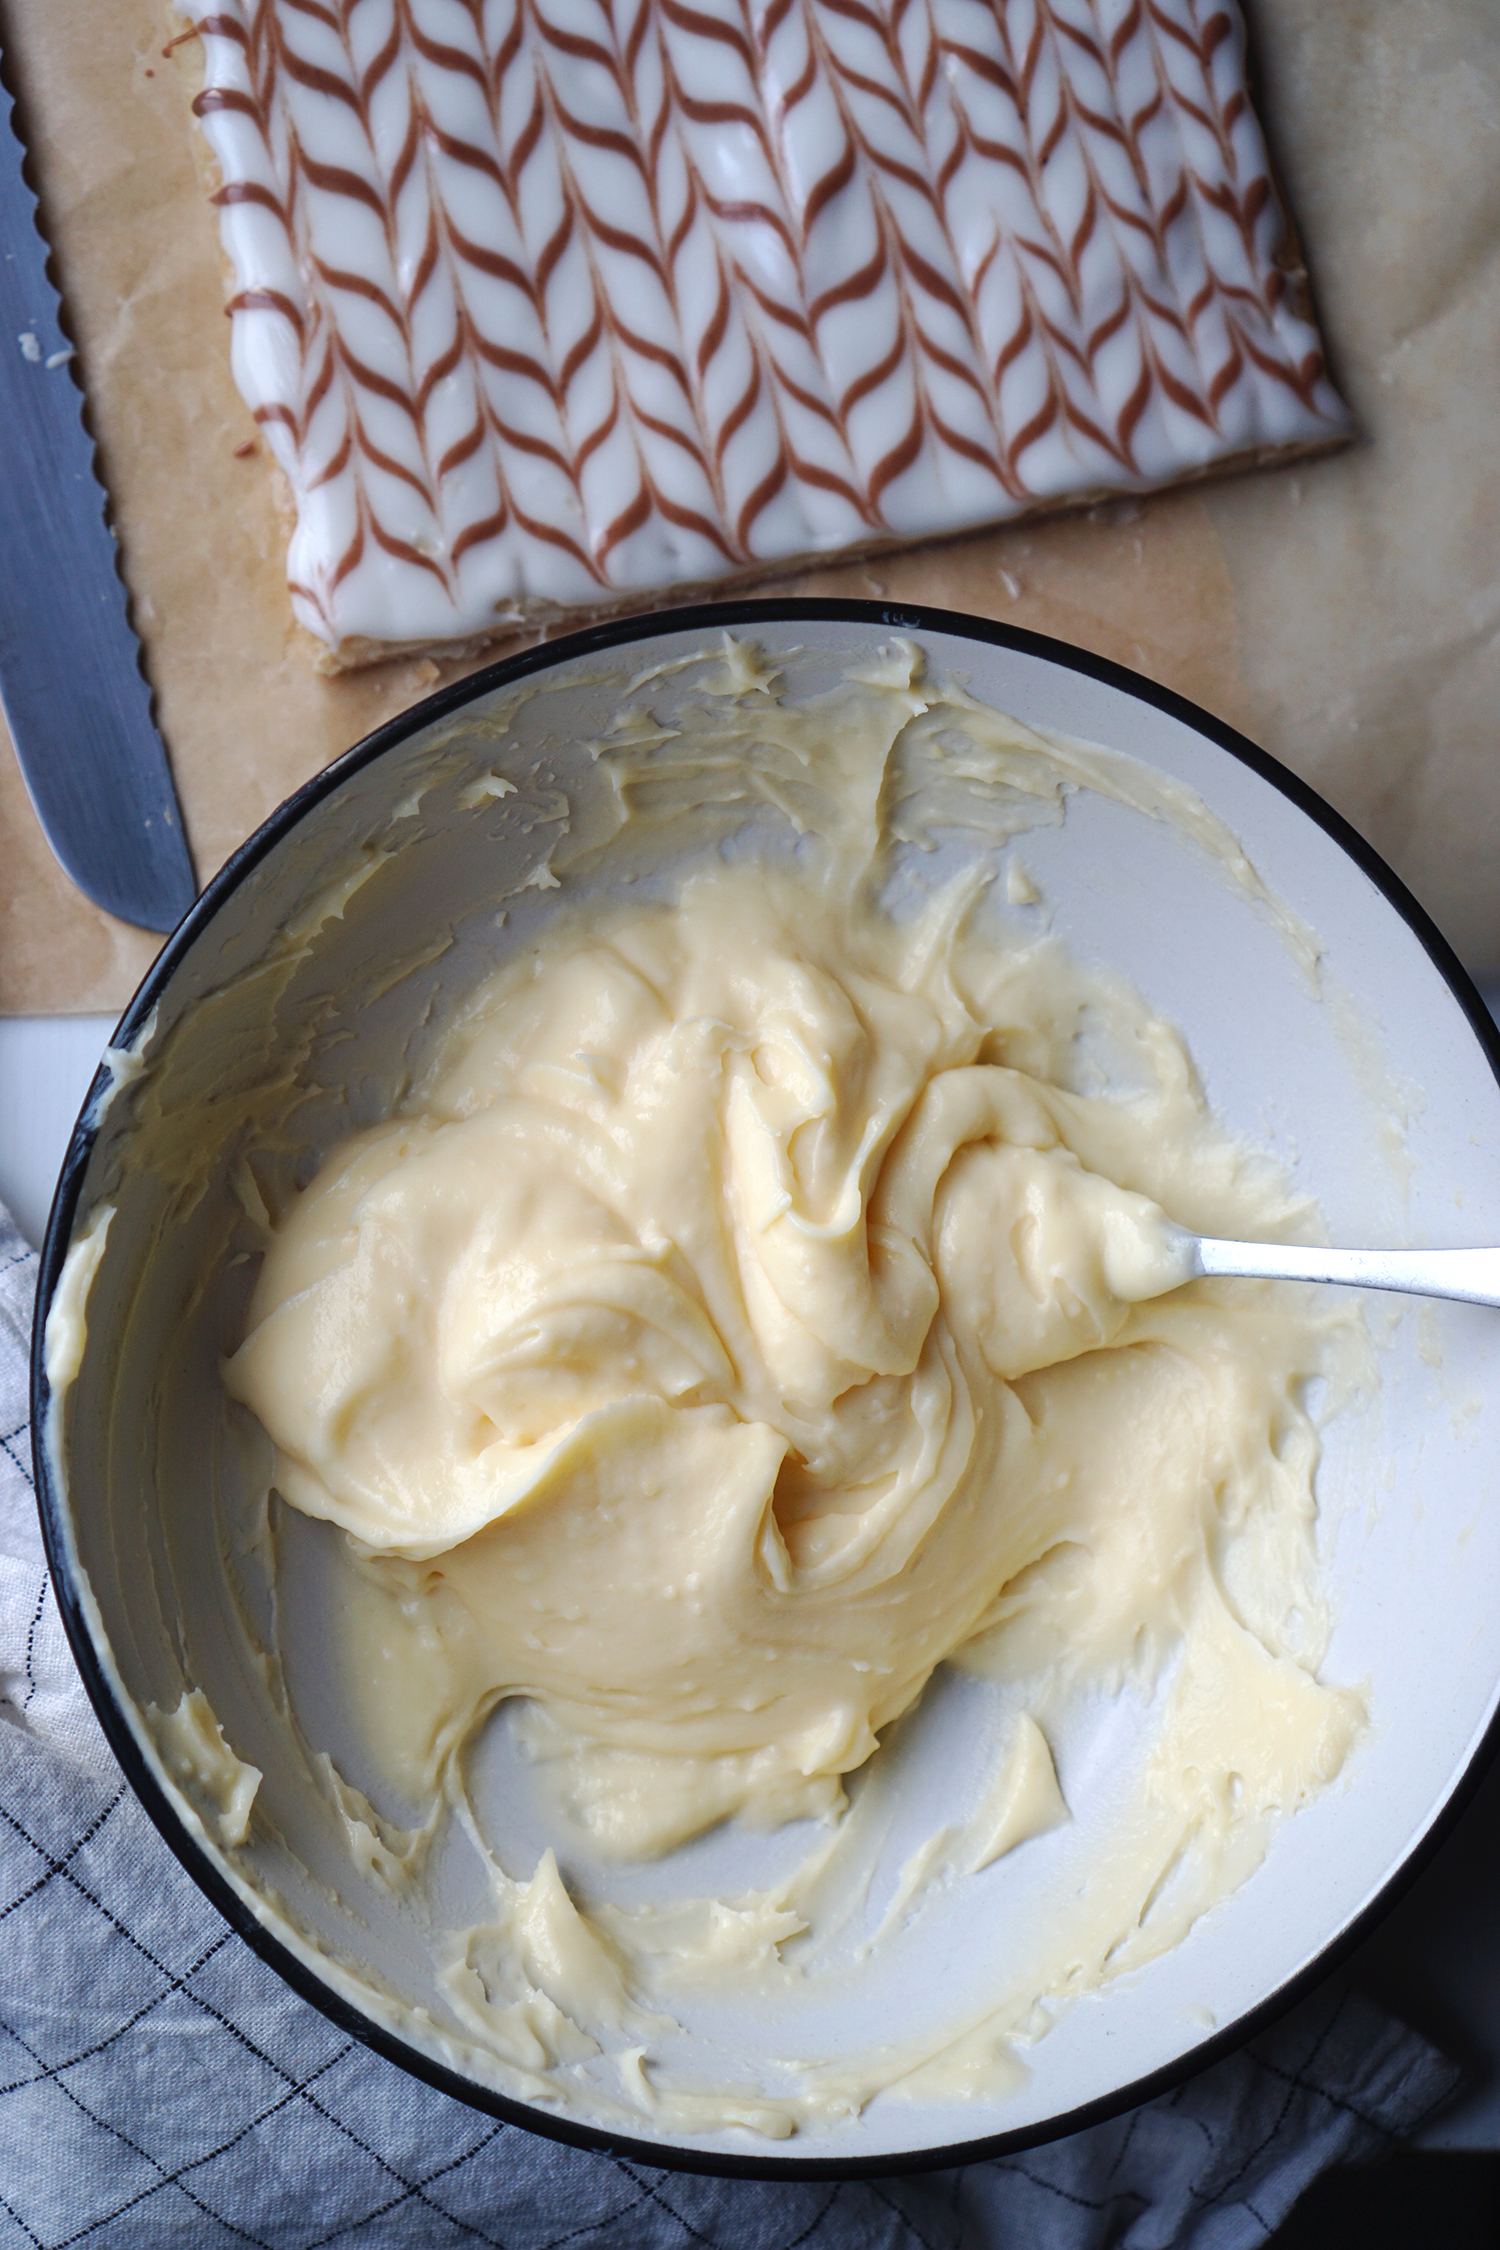 Perfectly creamy vanilla pastry cream